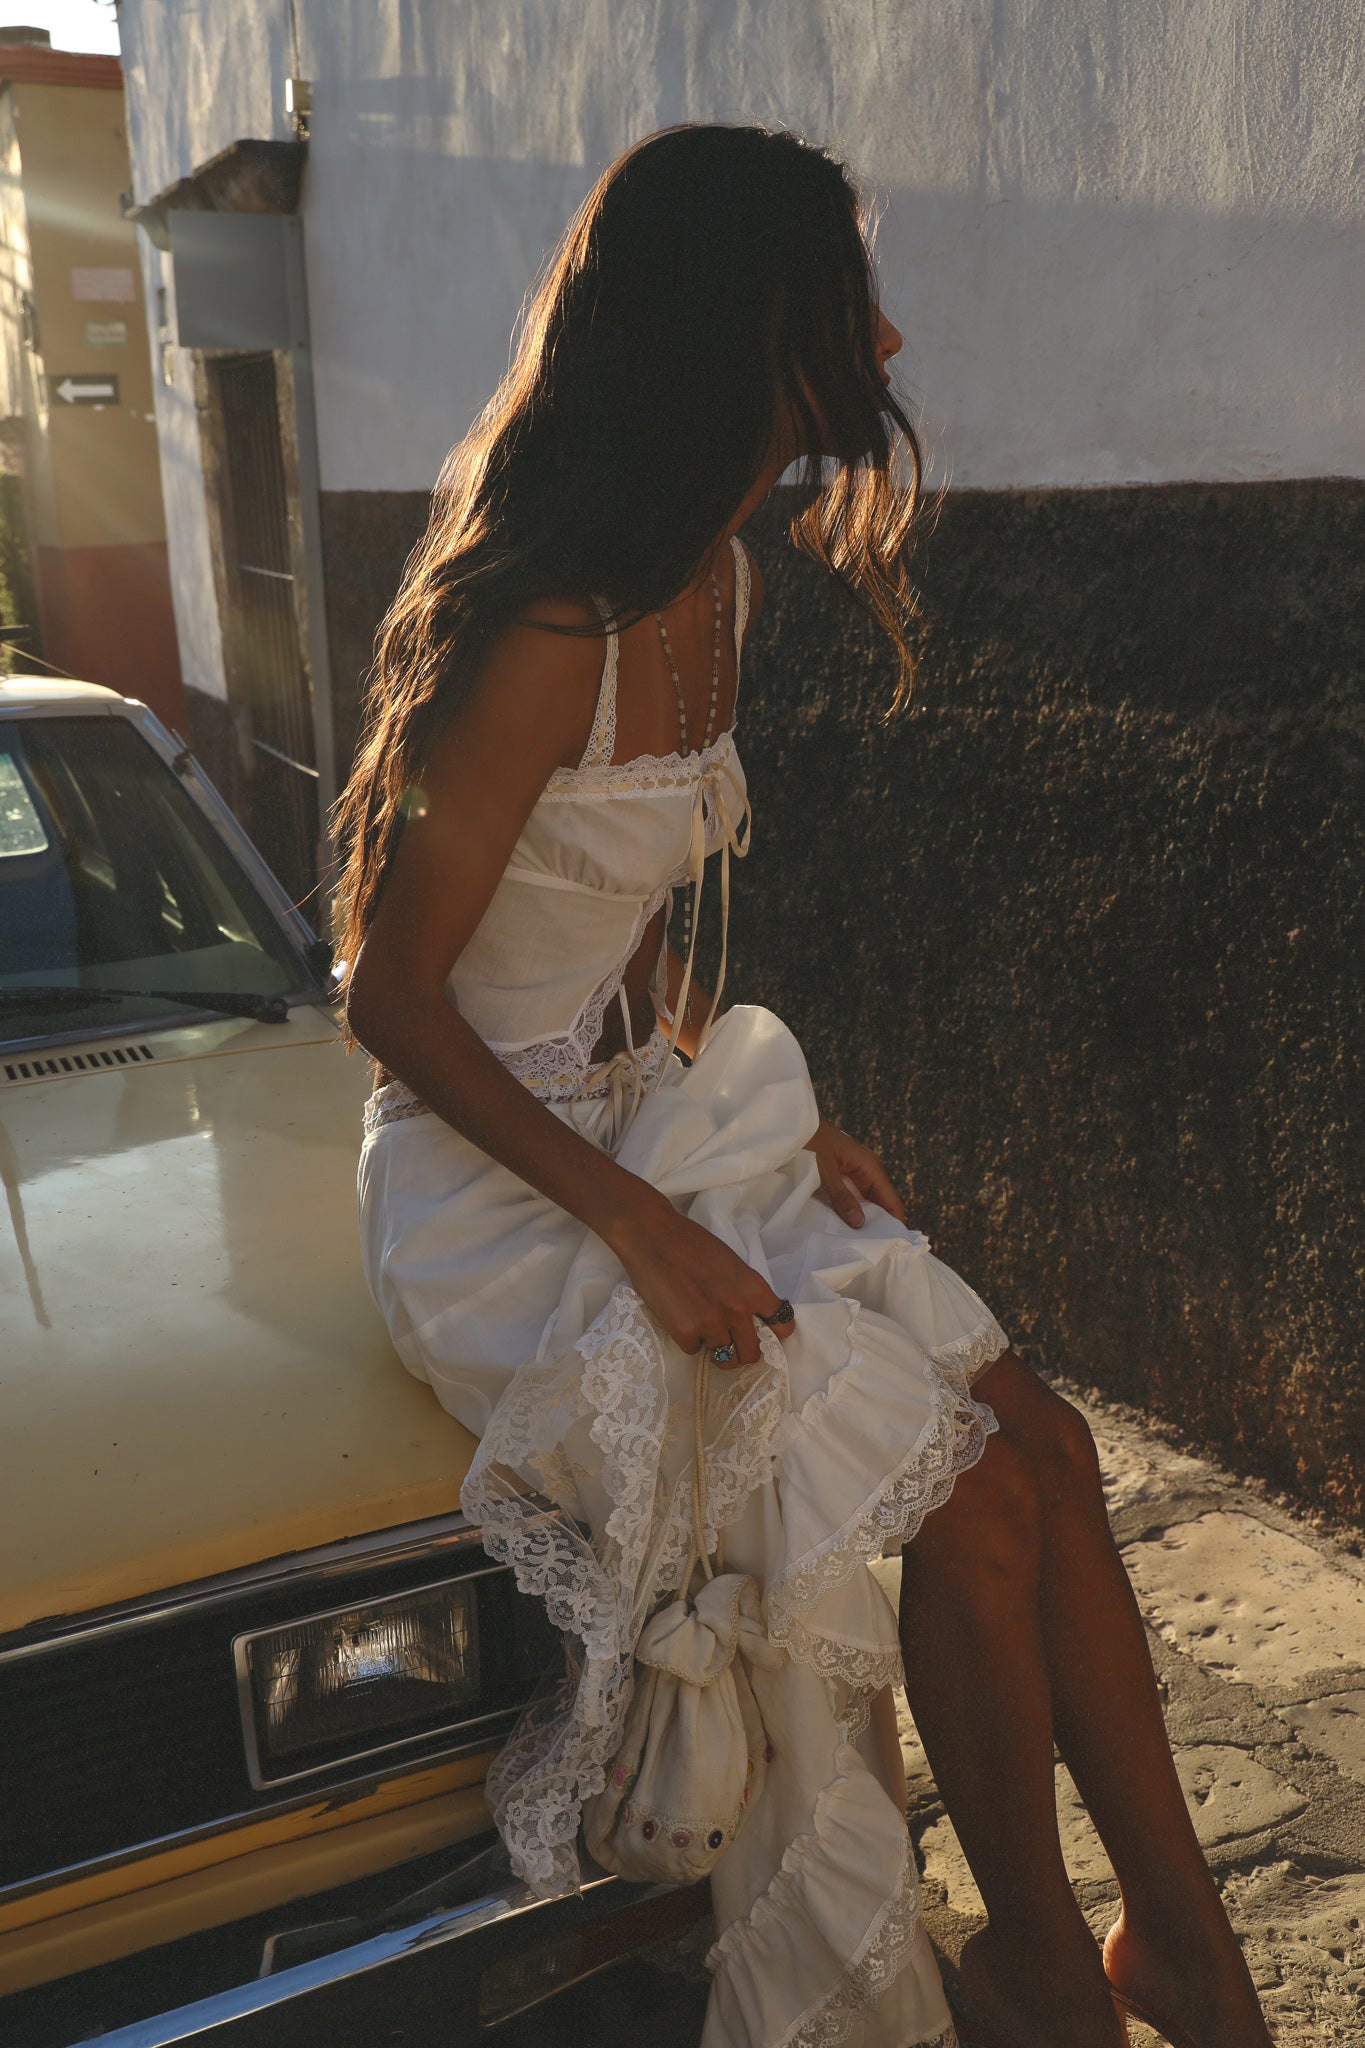 Petticoat White